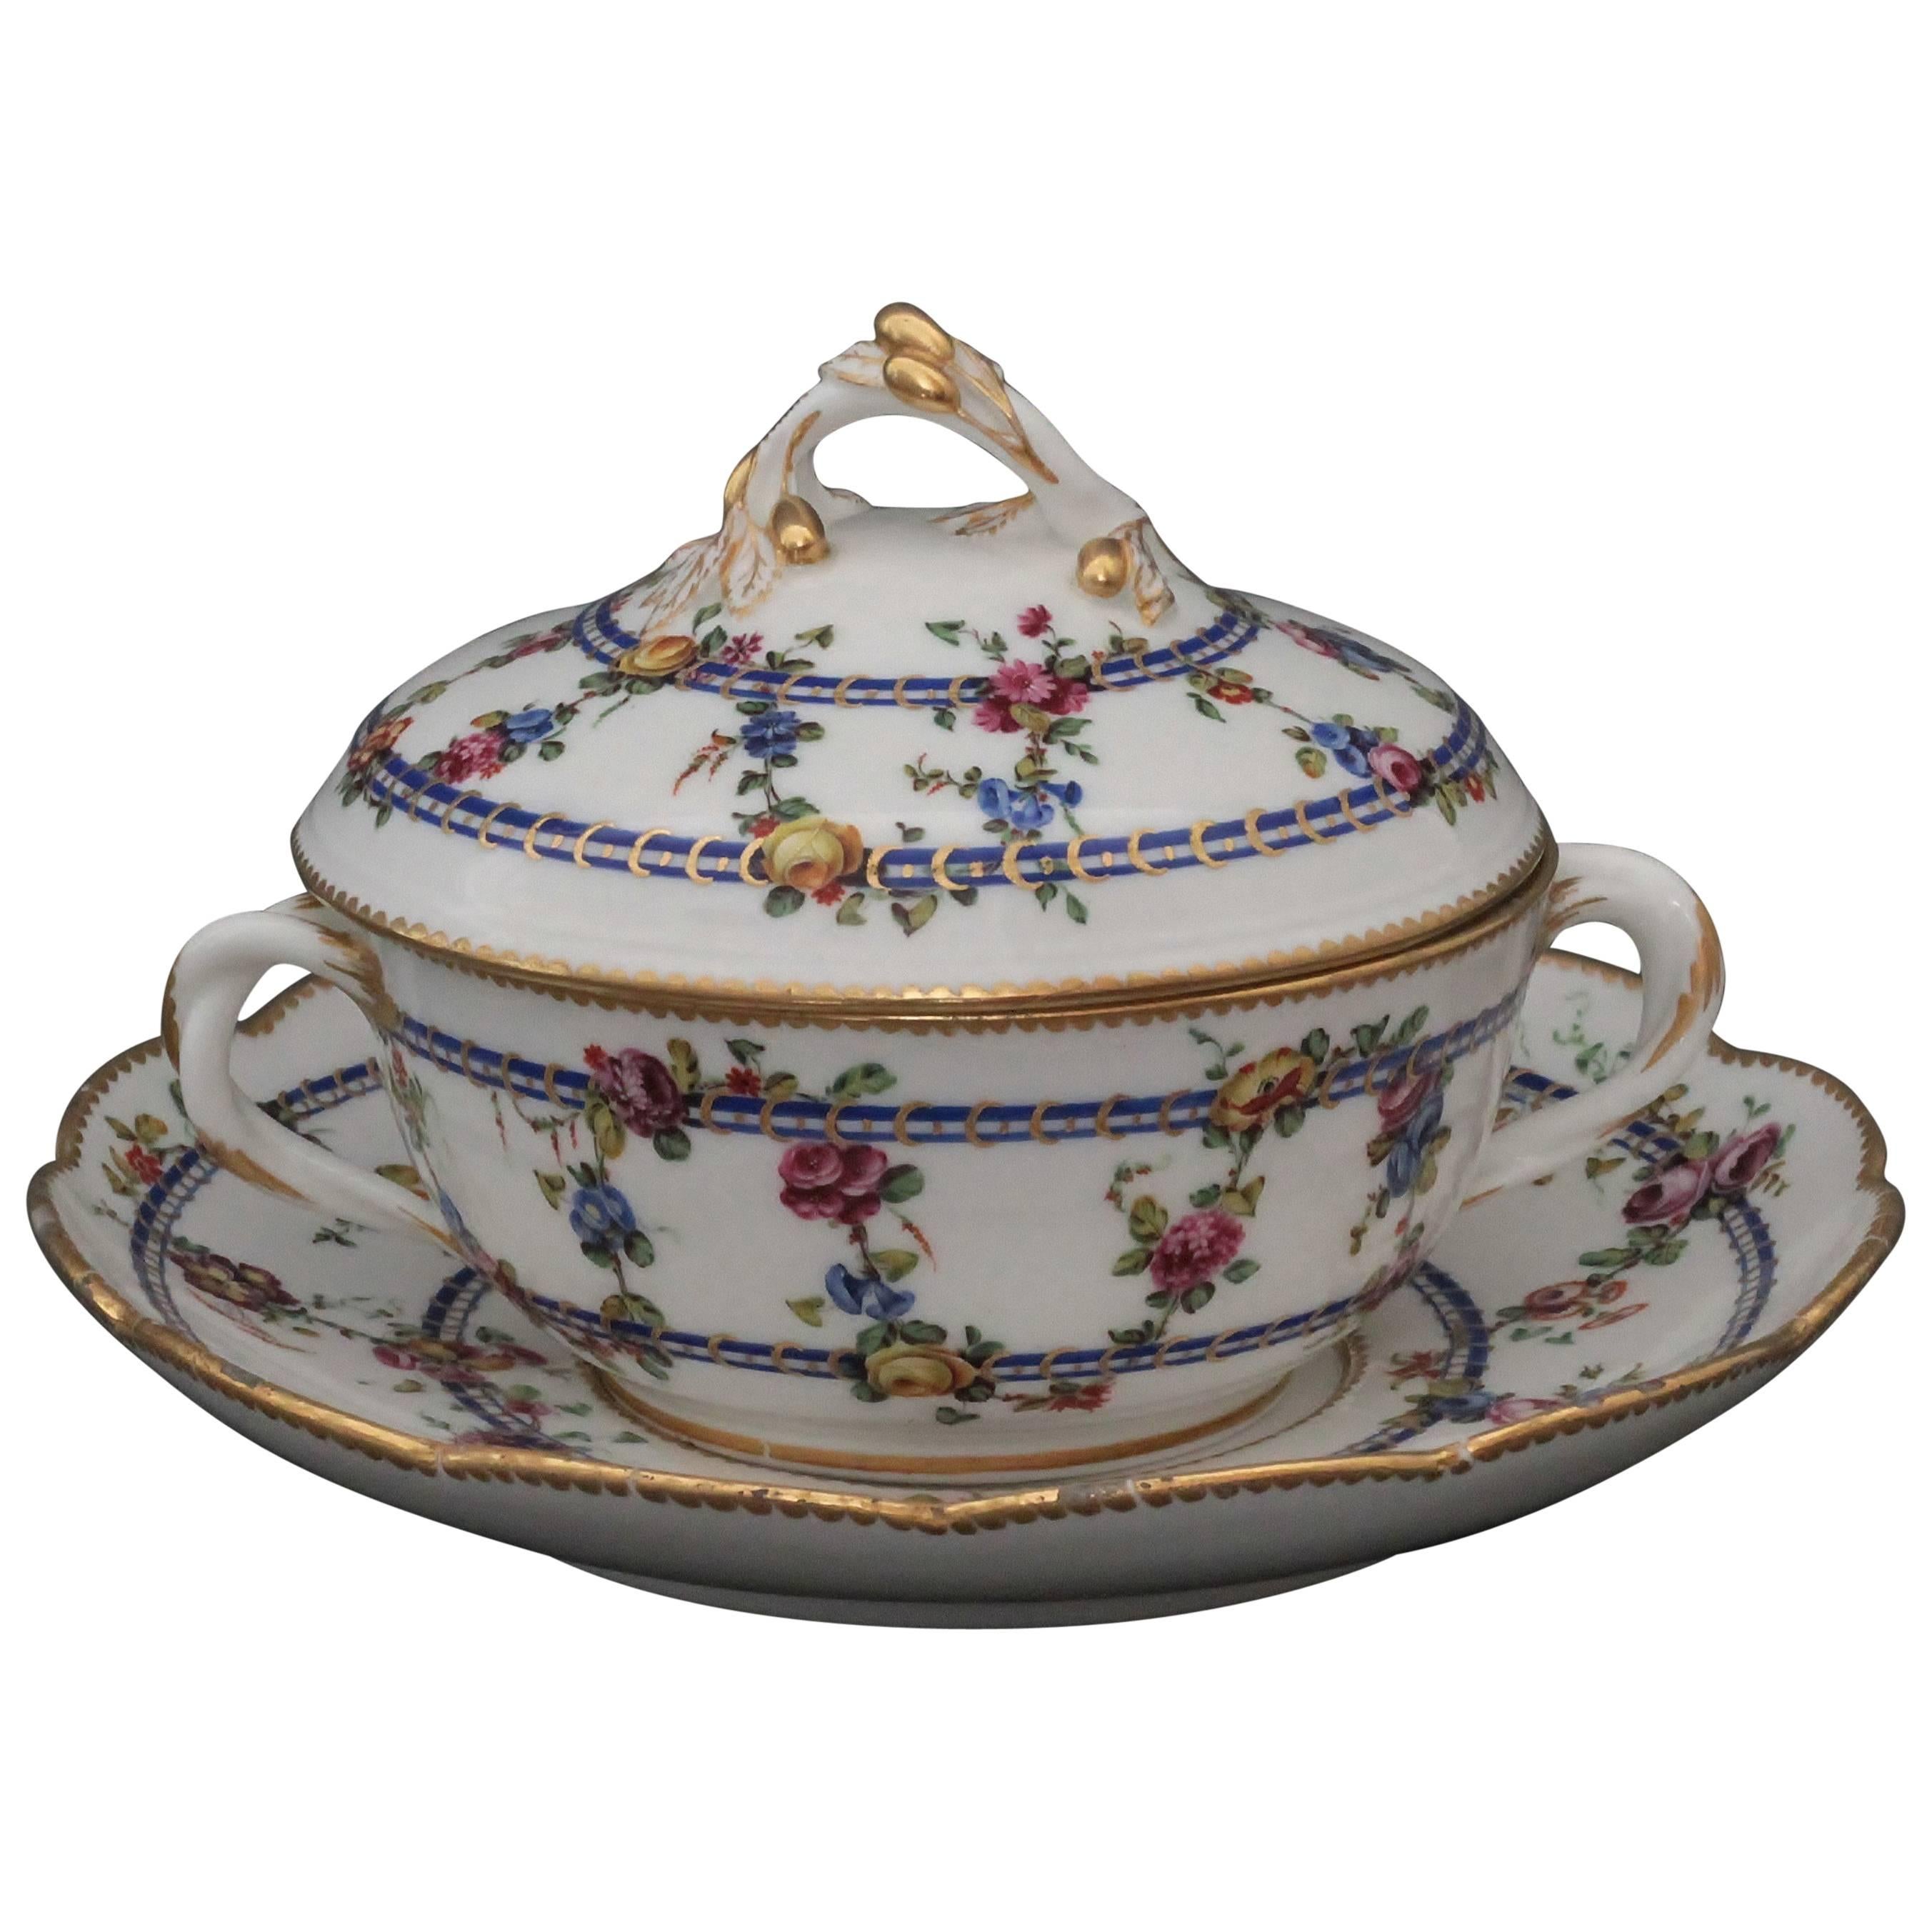 Sevres Porcelain Circular Ecuelle, Cover and Stand, circa 1760-1765